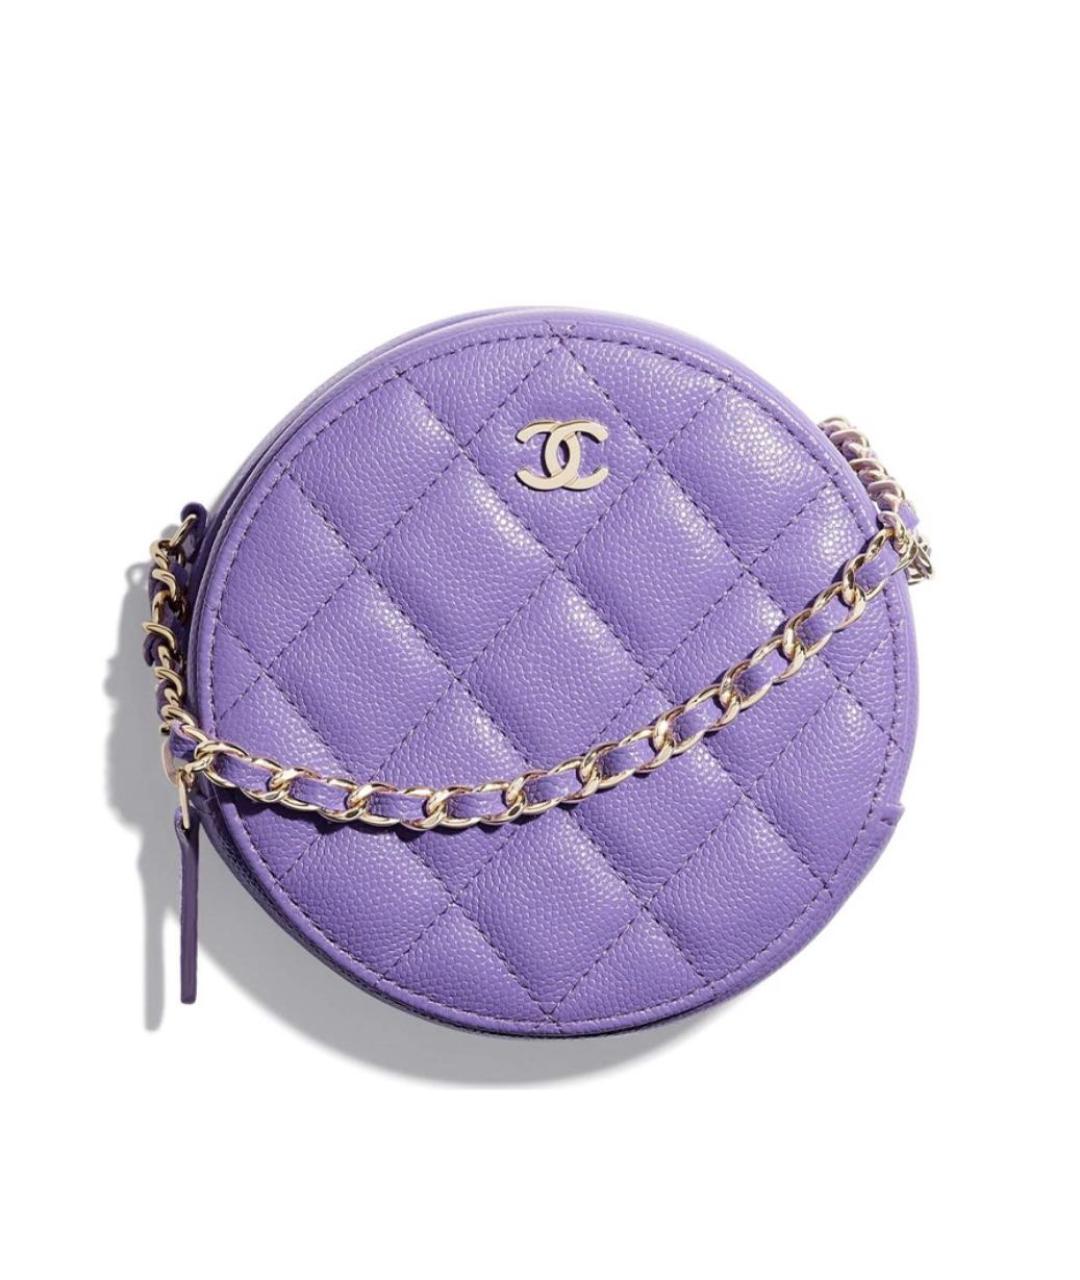 CHANEL PRE-OWNED Фиолетовая кожаная сумка через плечо, фото 1